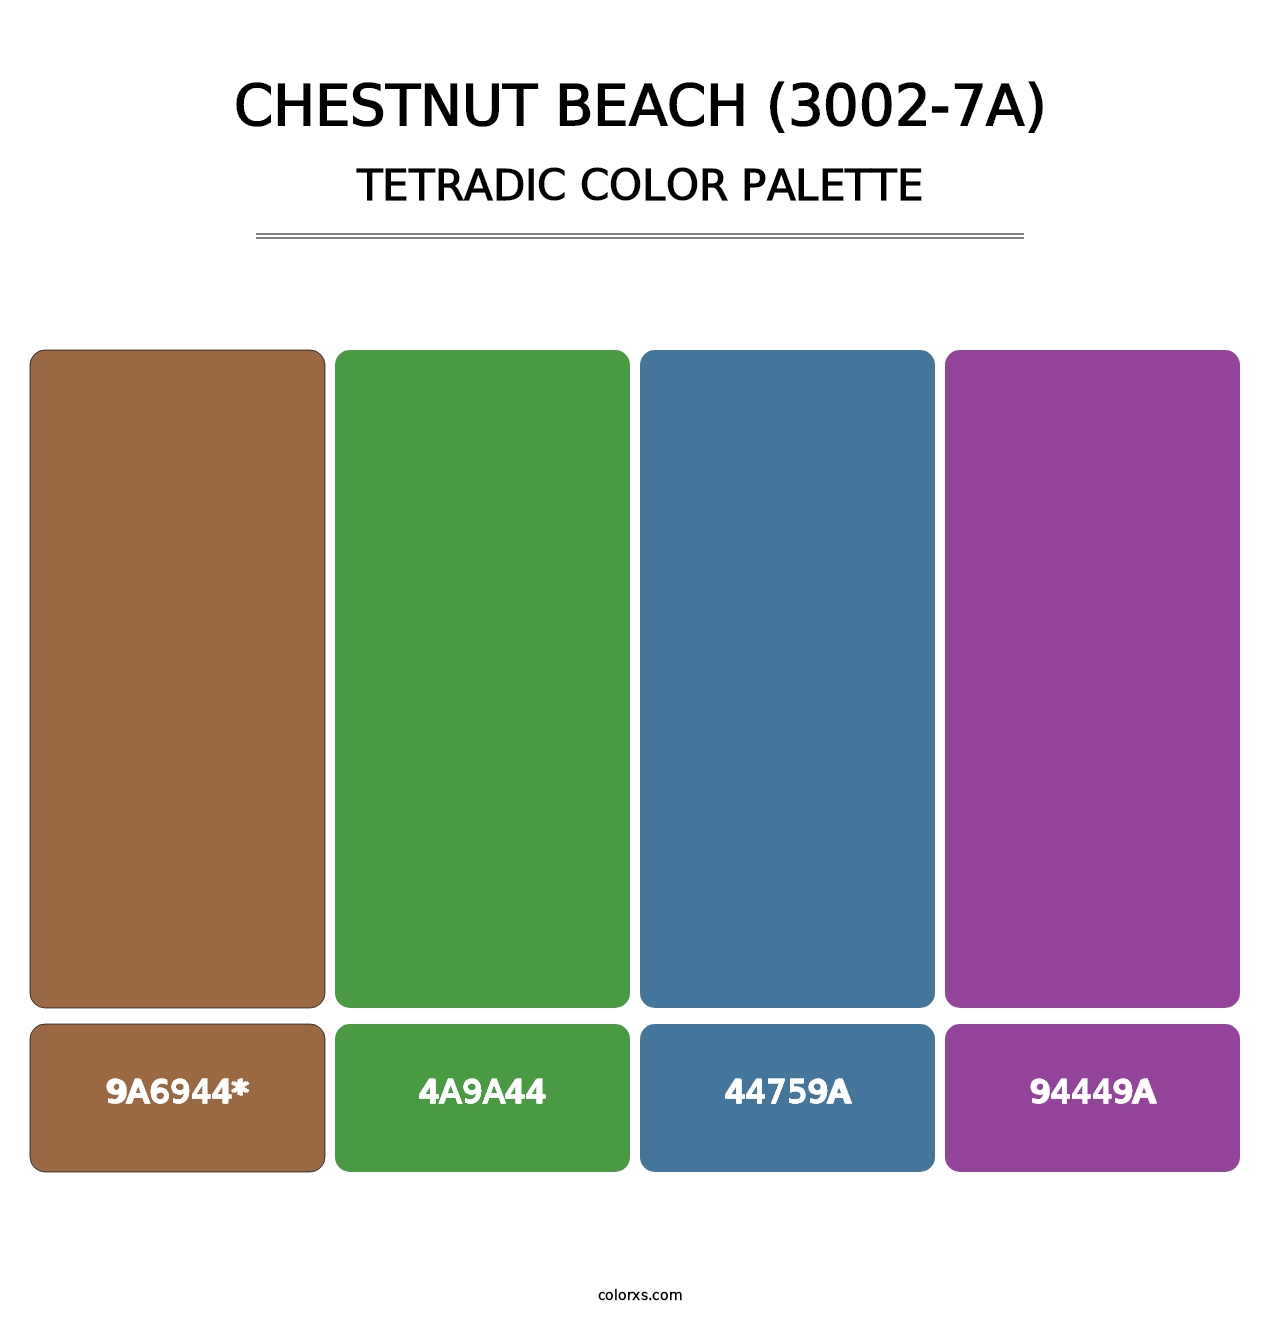 Chestnut Beach (3002-7A) - Tetradic Color Palette